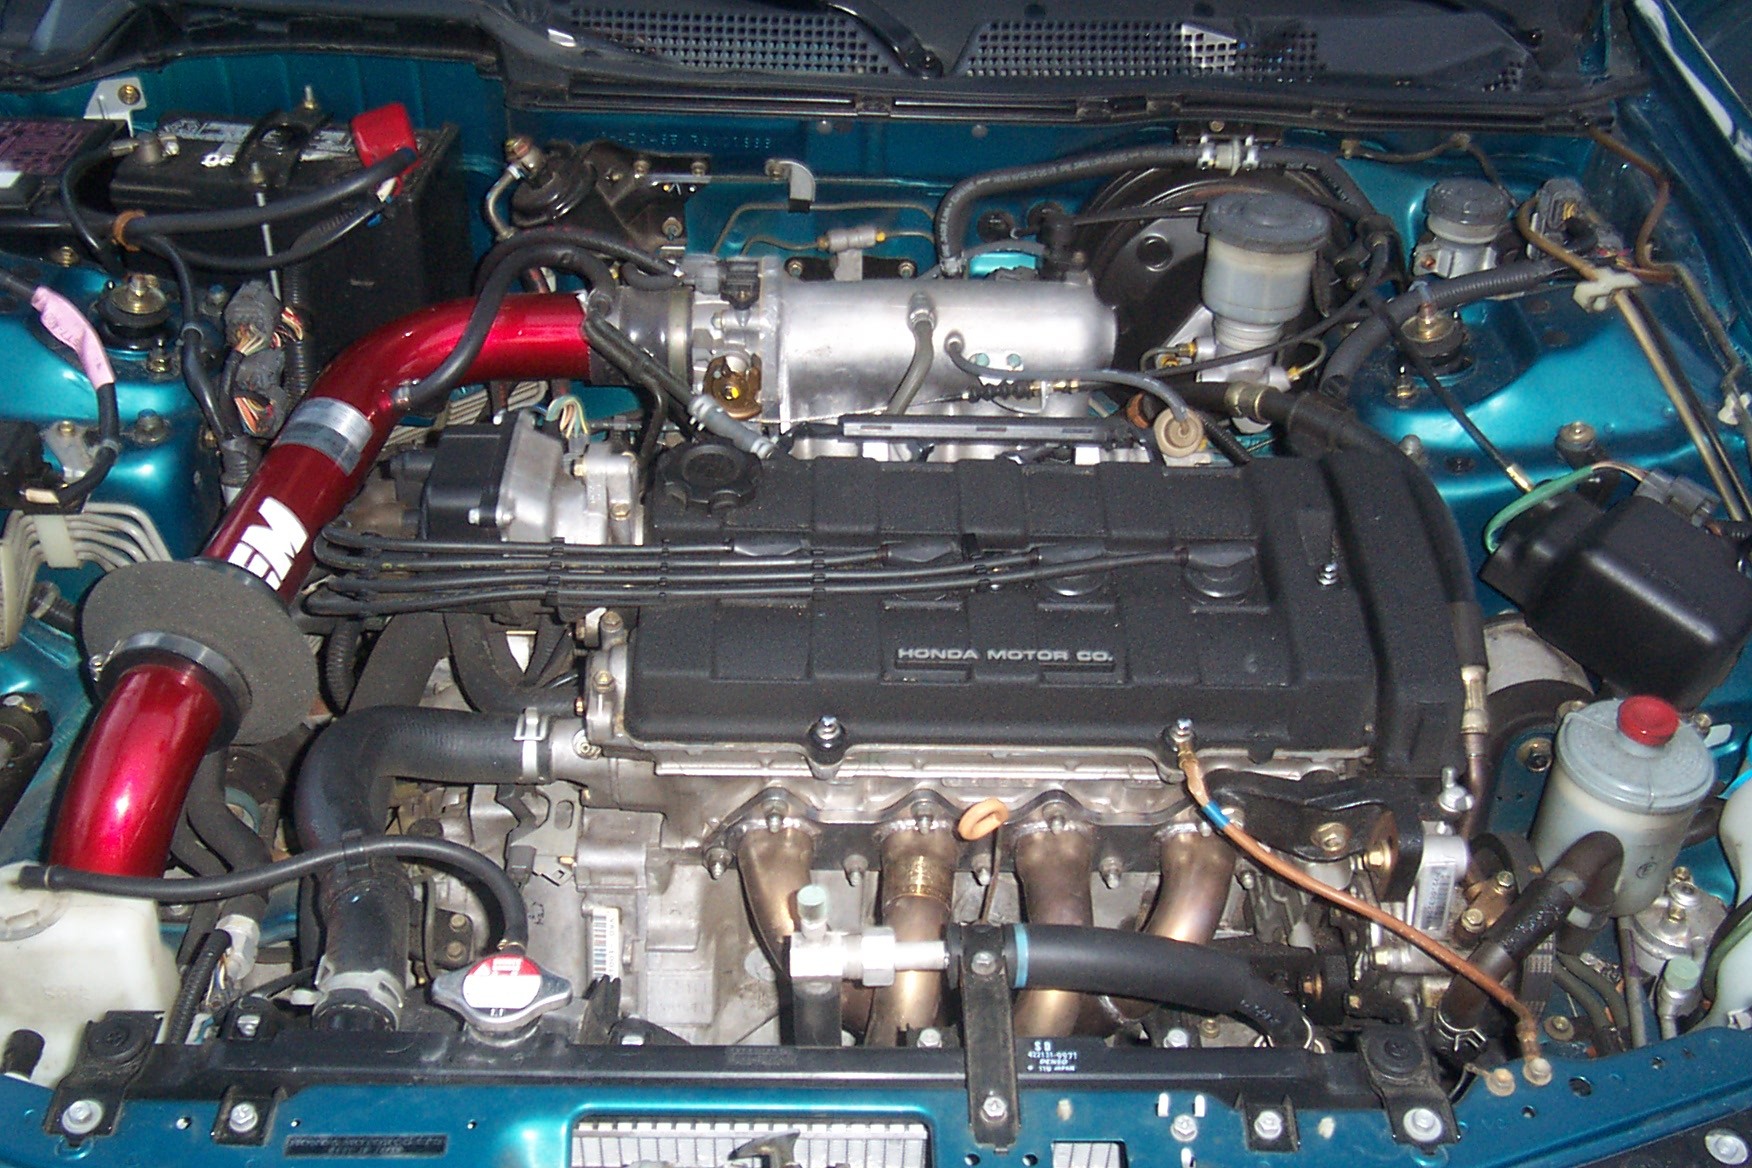 95 Acura Integra Engine Diagram which Integra Has This Engine In It Of 95 Acura Integra Engine Diagram